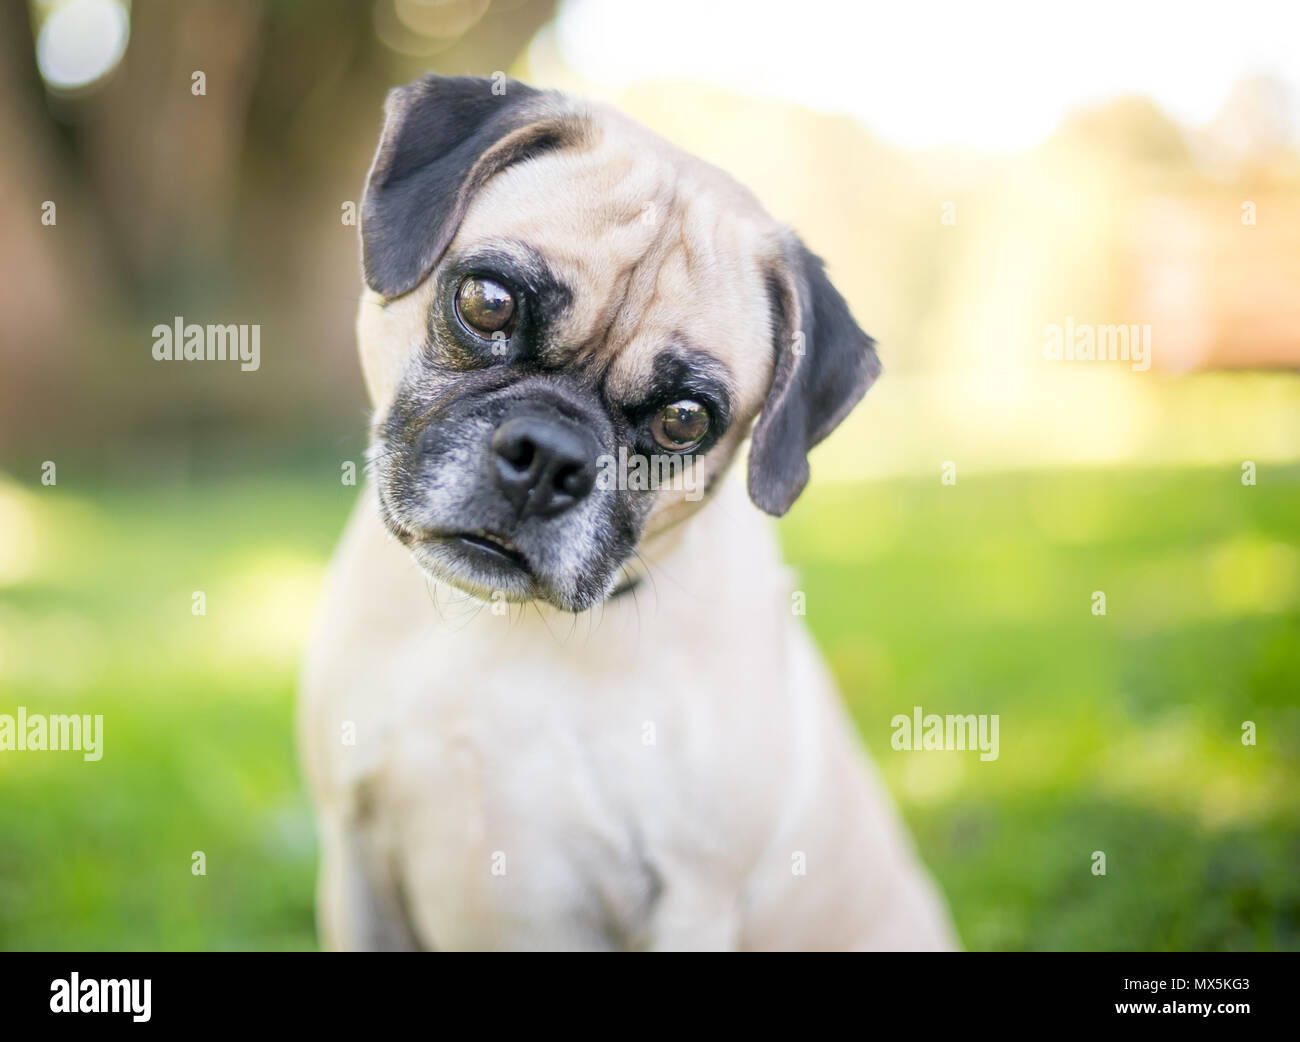 A Pug/Beagle mixed breed dog listening with a head tilt Stock Photo